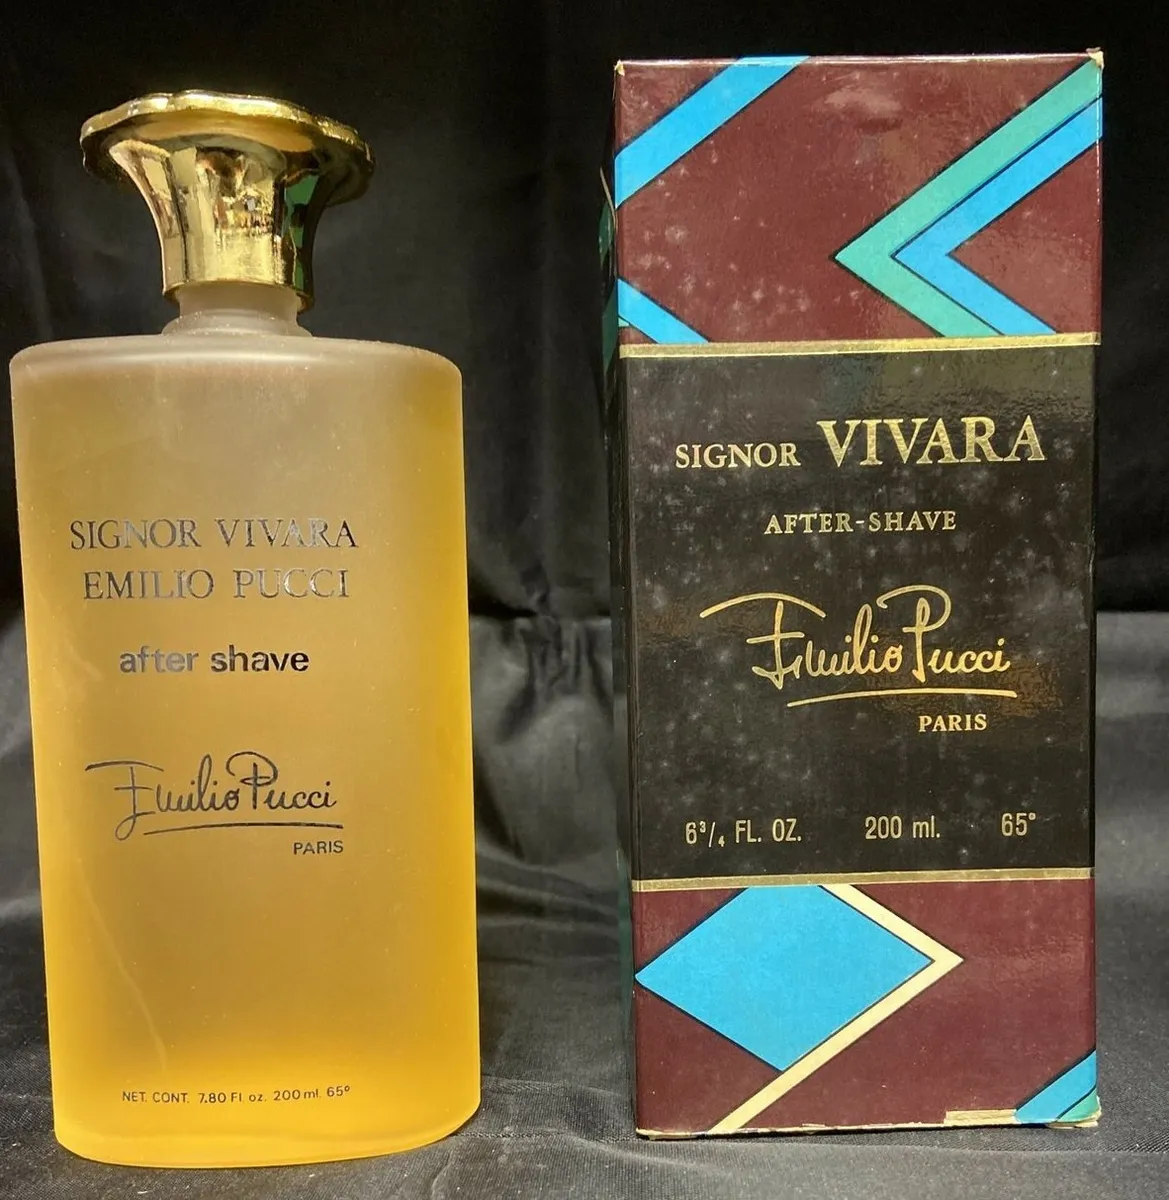 EAU SAUVAGE By Christian Dior After Shave Lotion 3.4 Fl oz/100 ml Men  Vintage